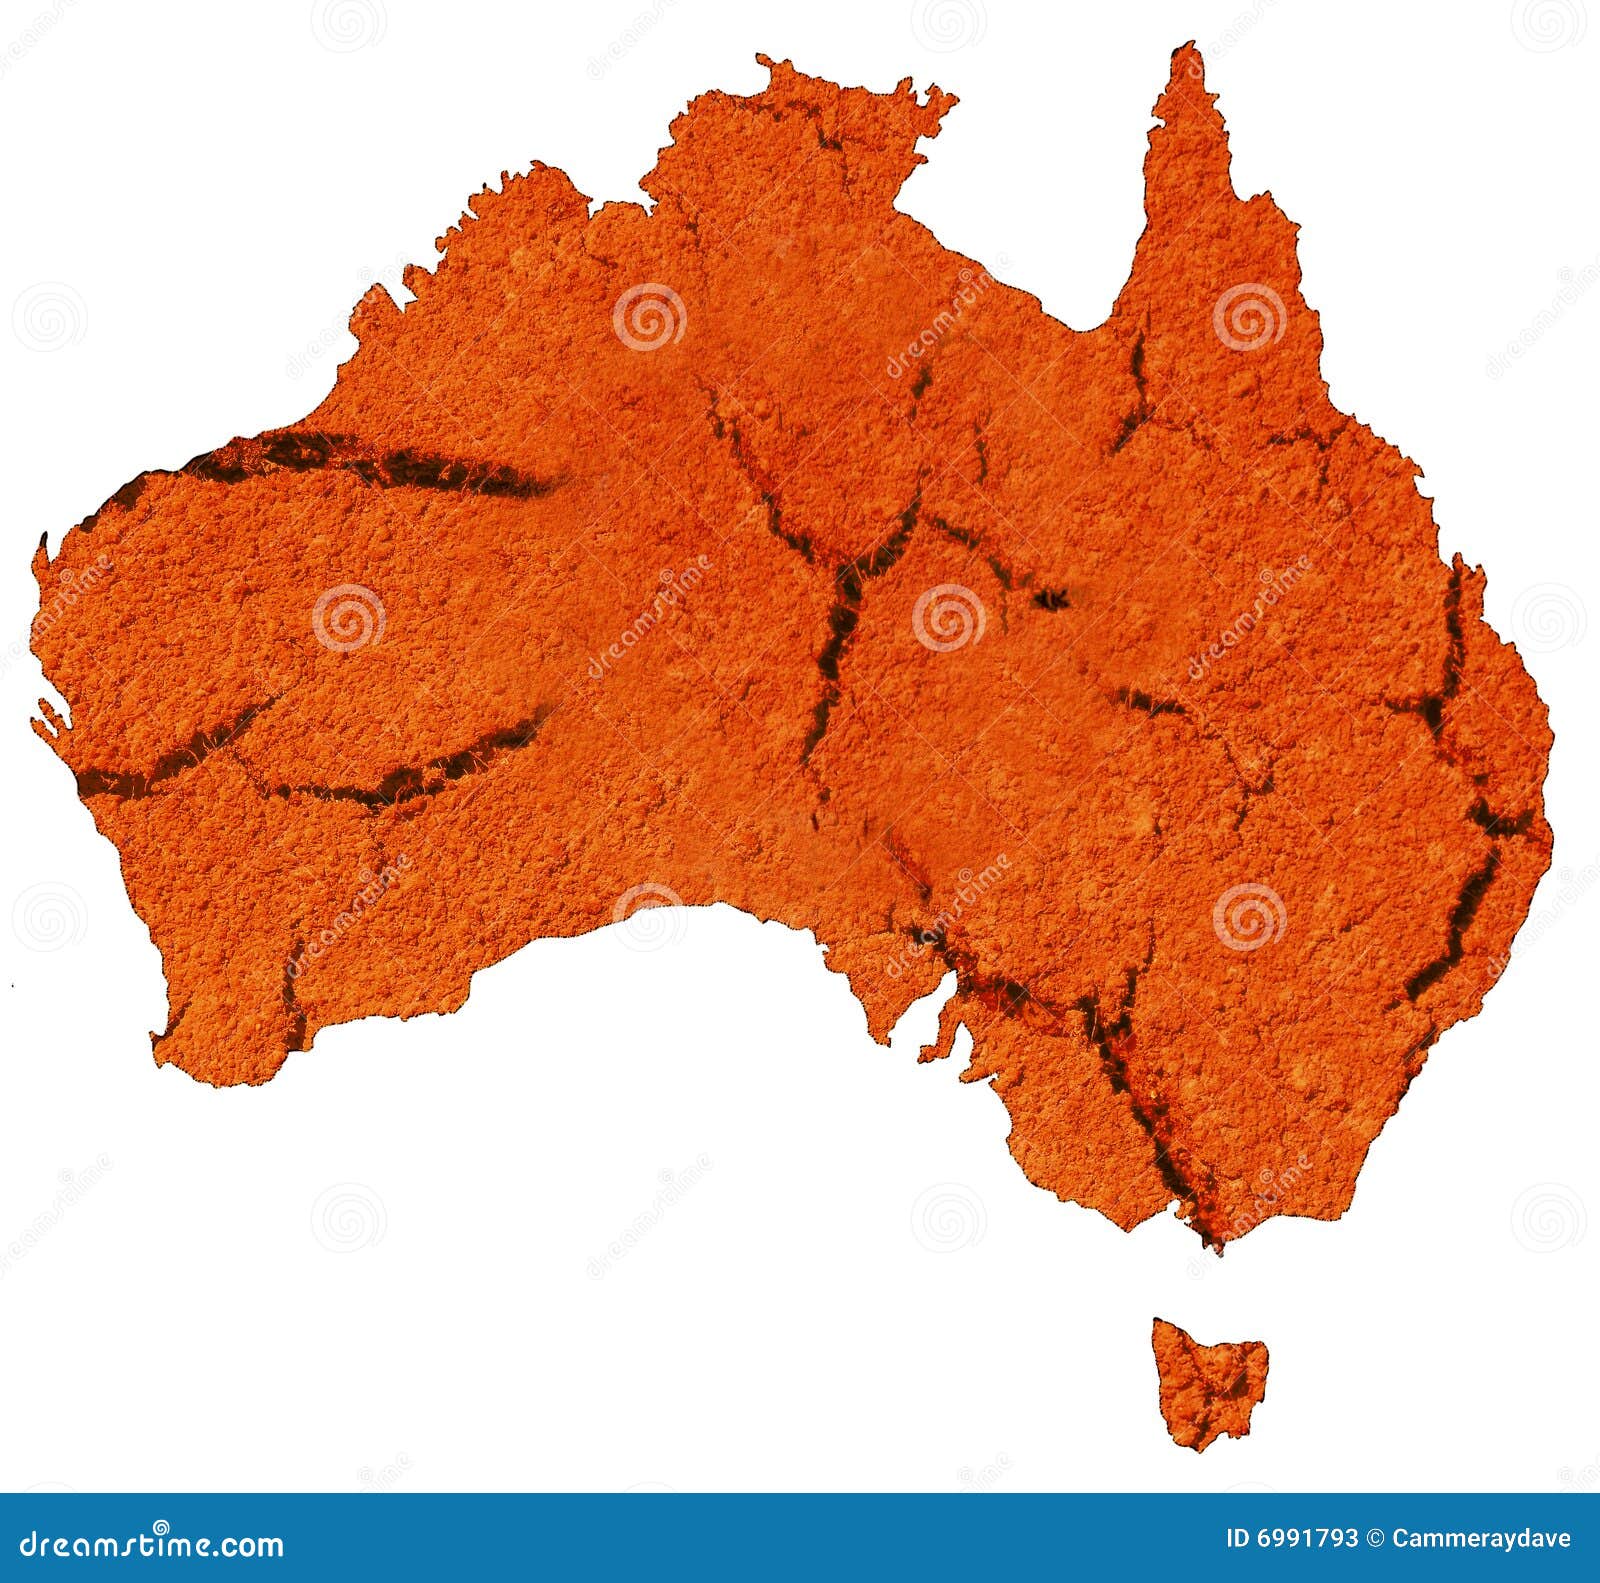 dry australian continent